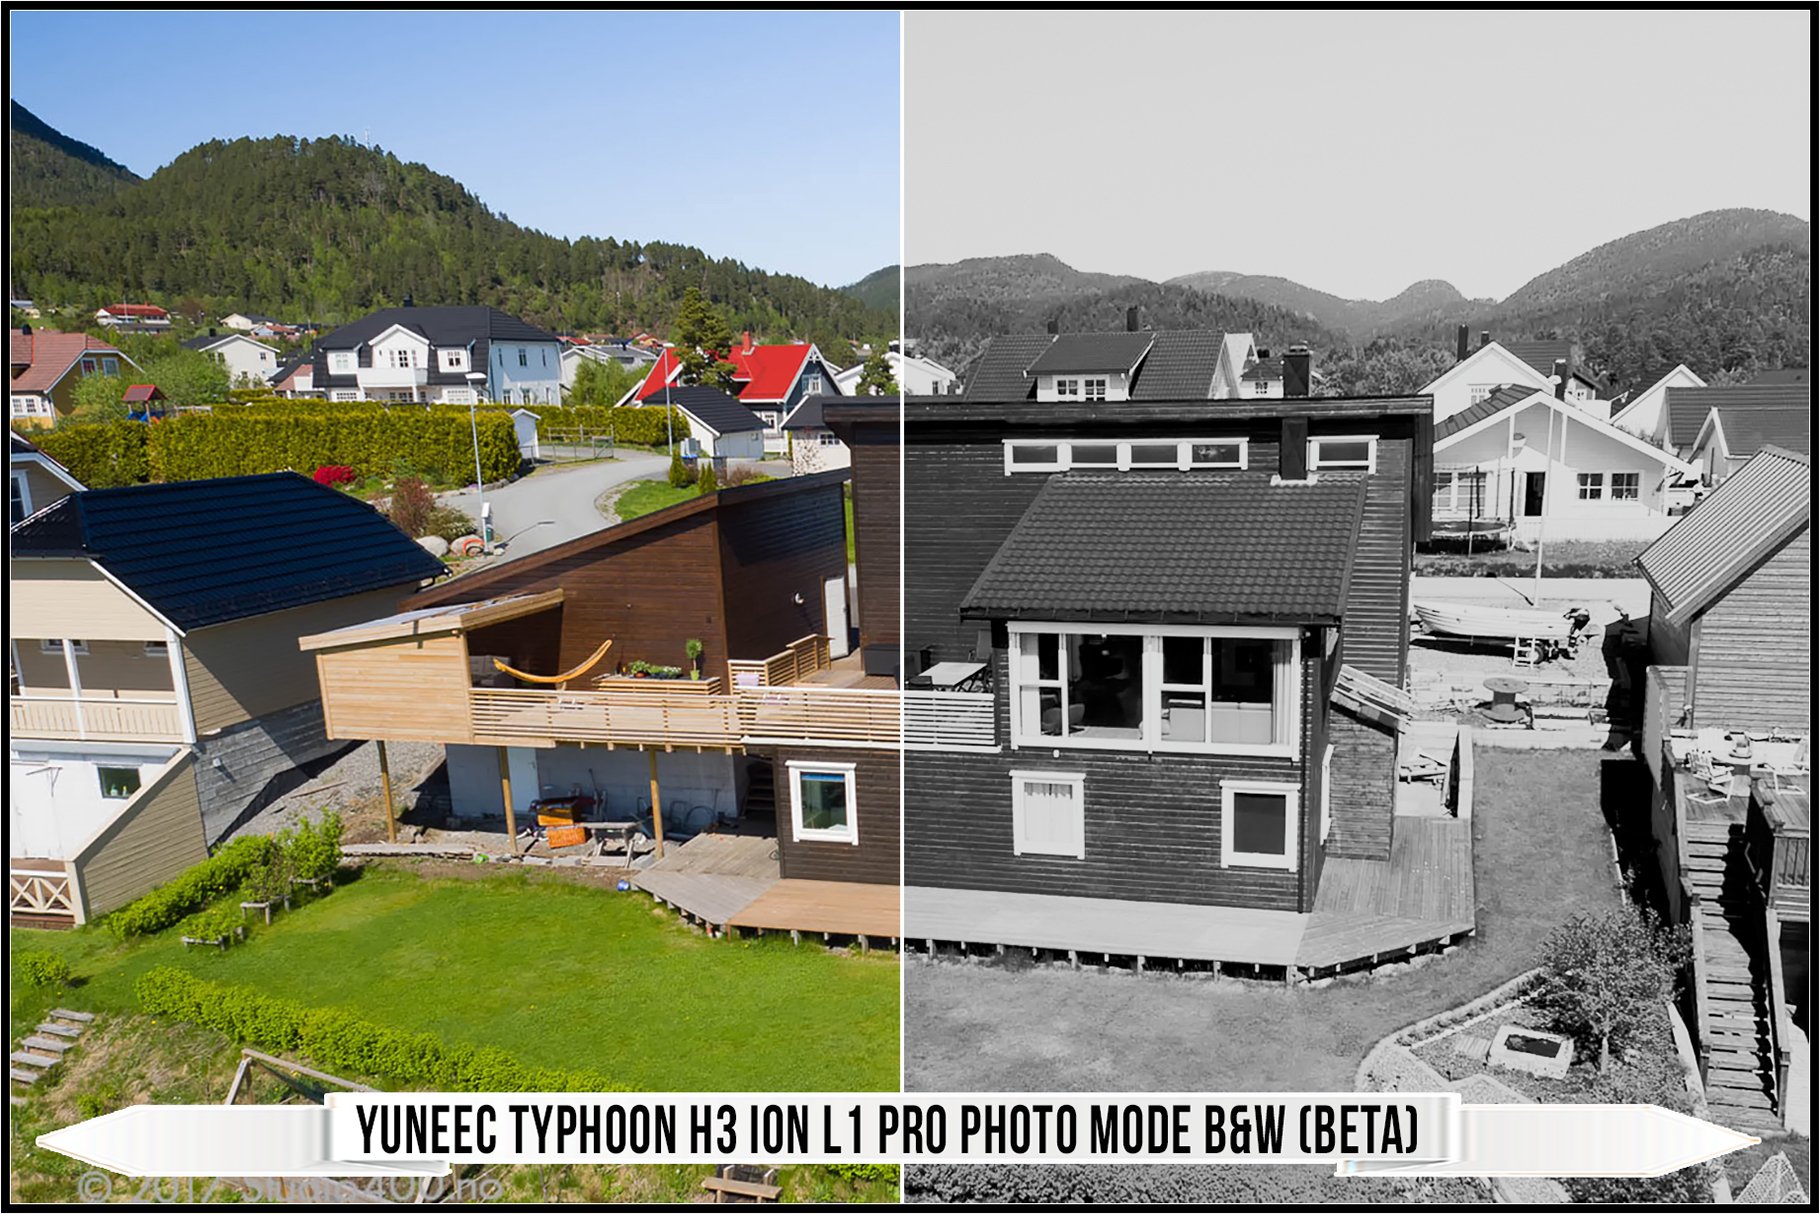 yuneec typhoon h3 ion l1 pro photo mode bw 706